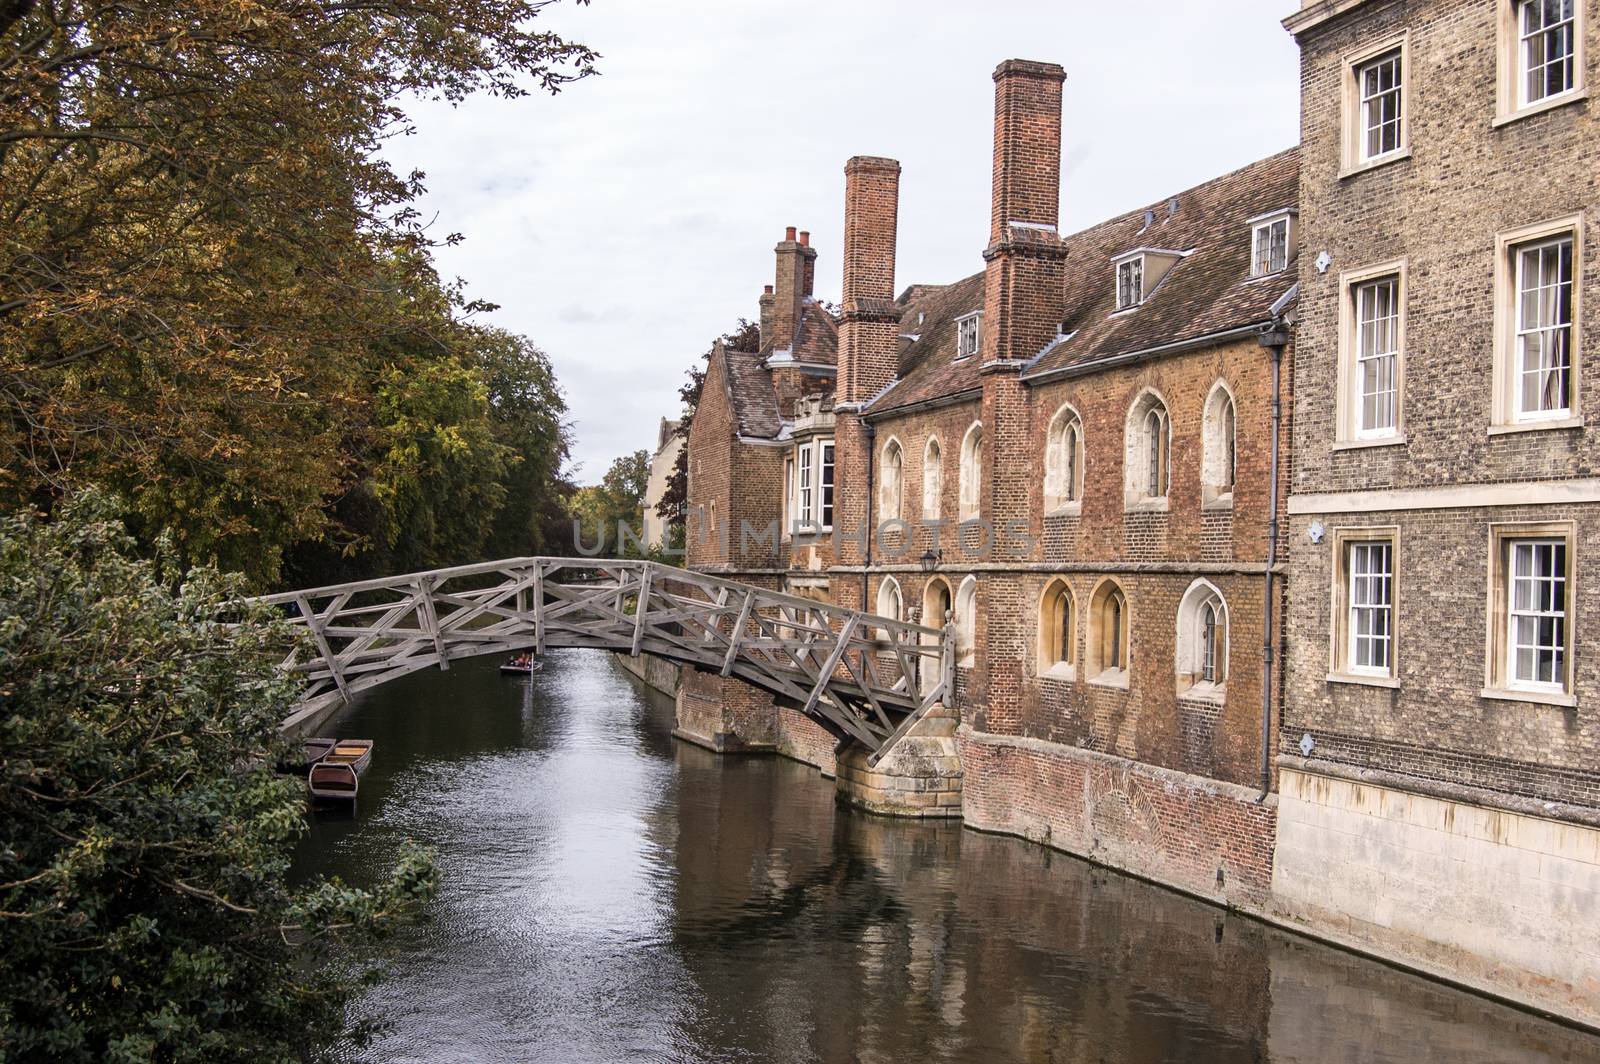 Mathematical Bridge, Cambridge by BasPhoto